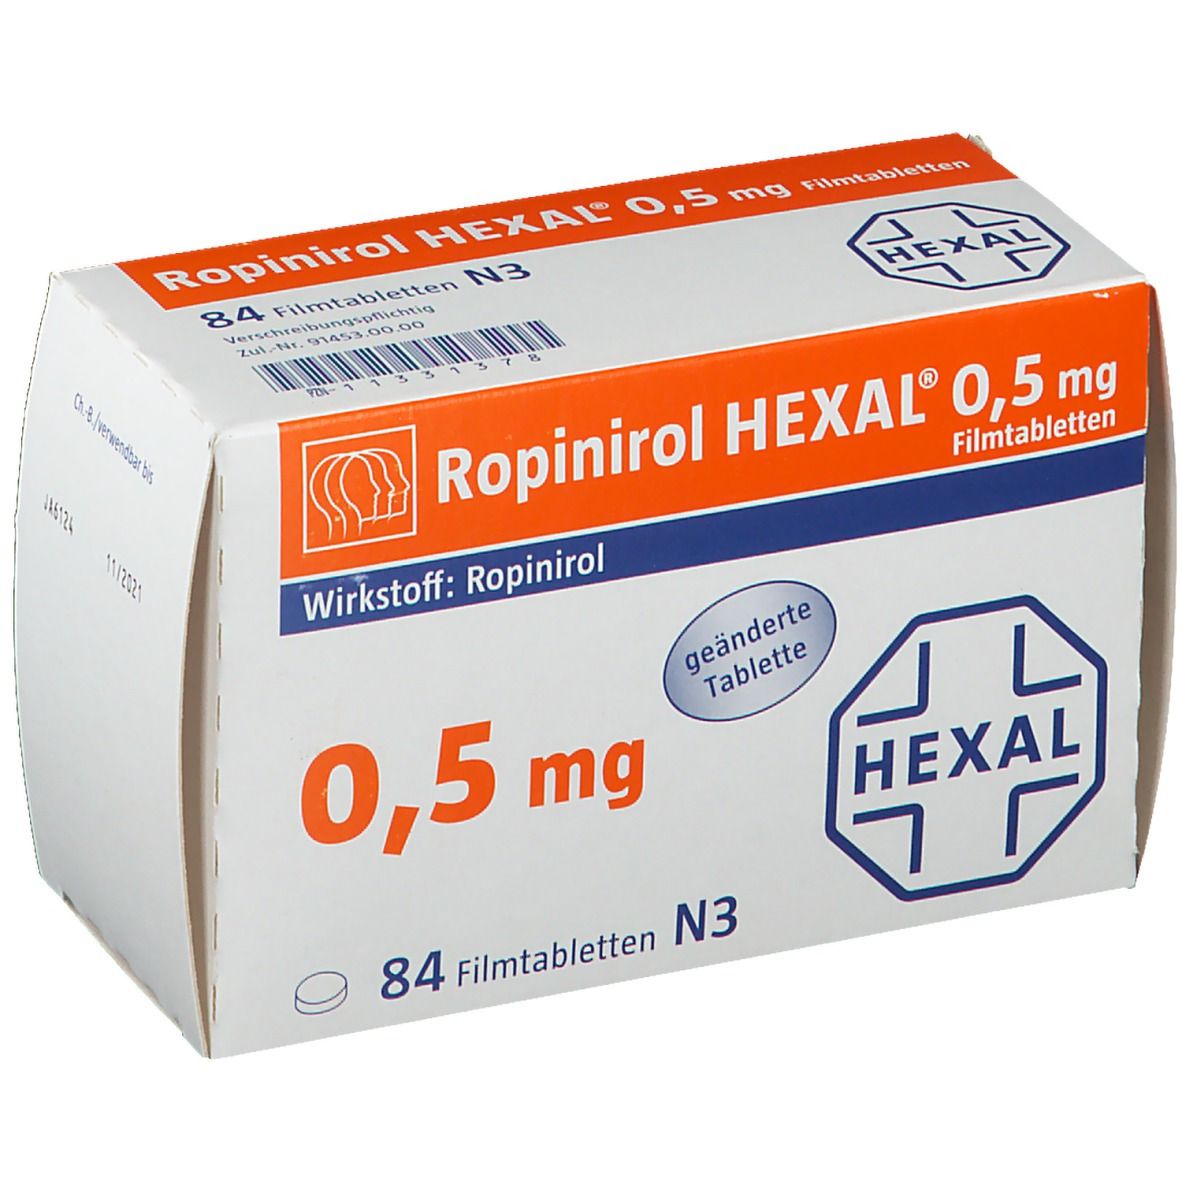 Ropinirol HEXAL® 0,5 mg